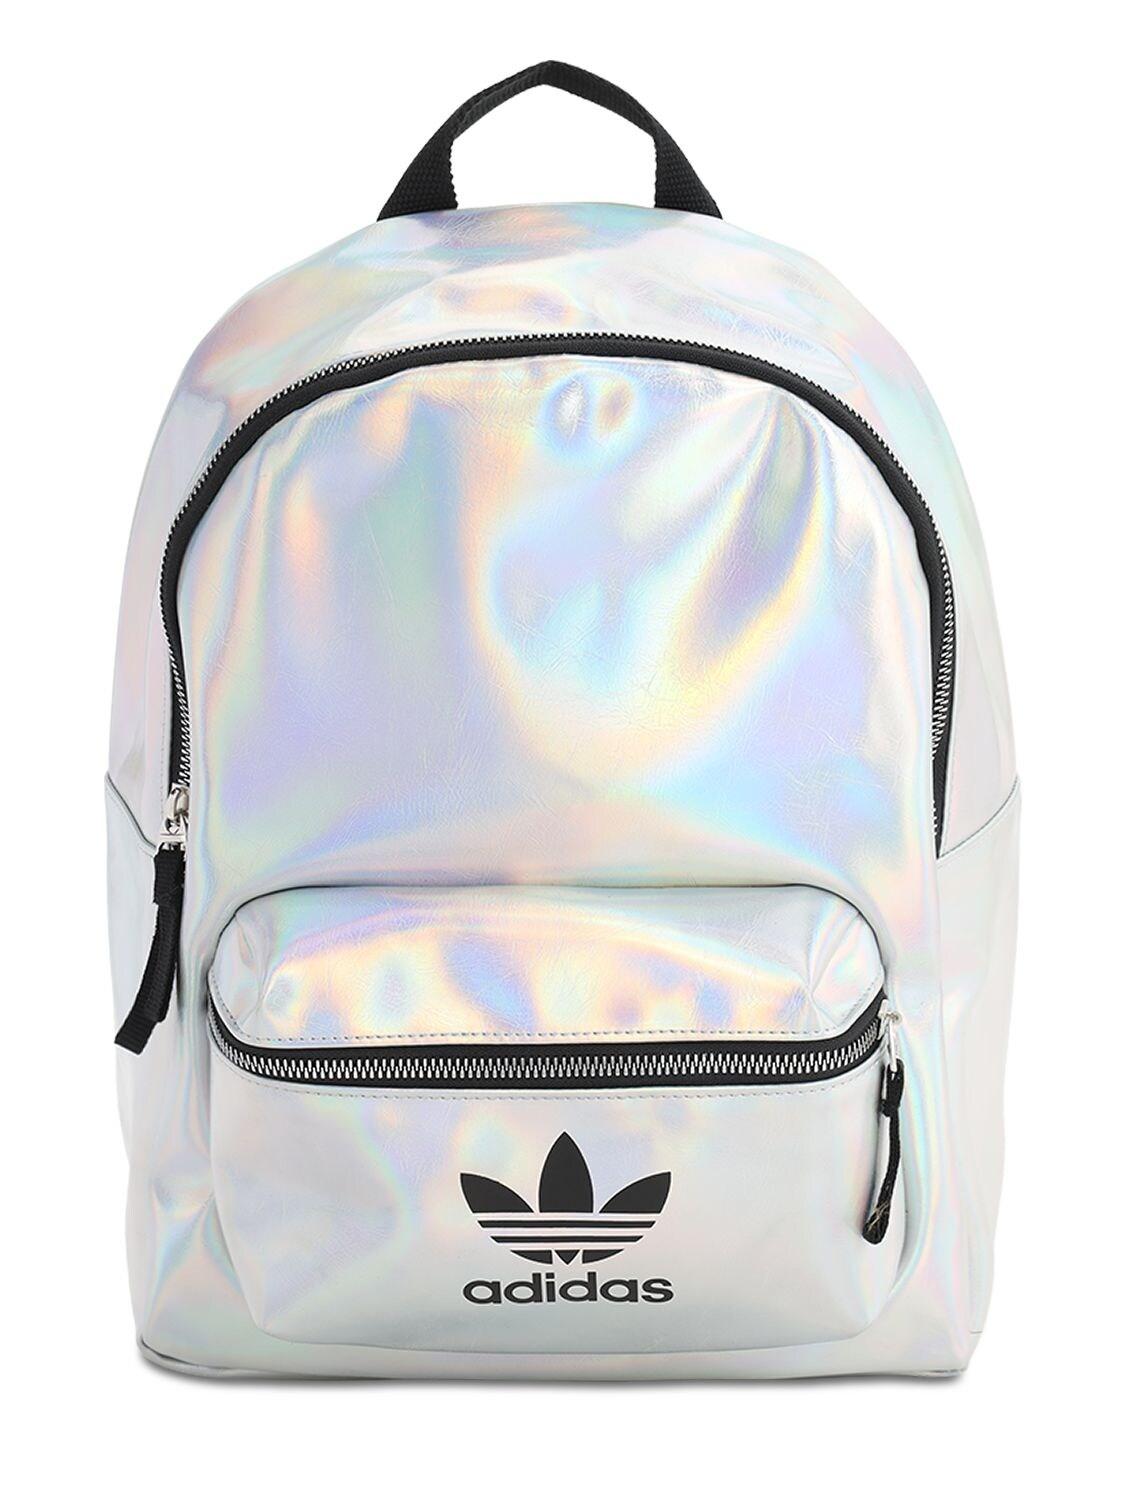 adidas National Mini Backpack - White / Halo Silver